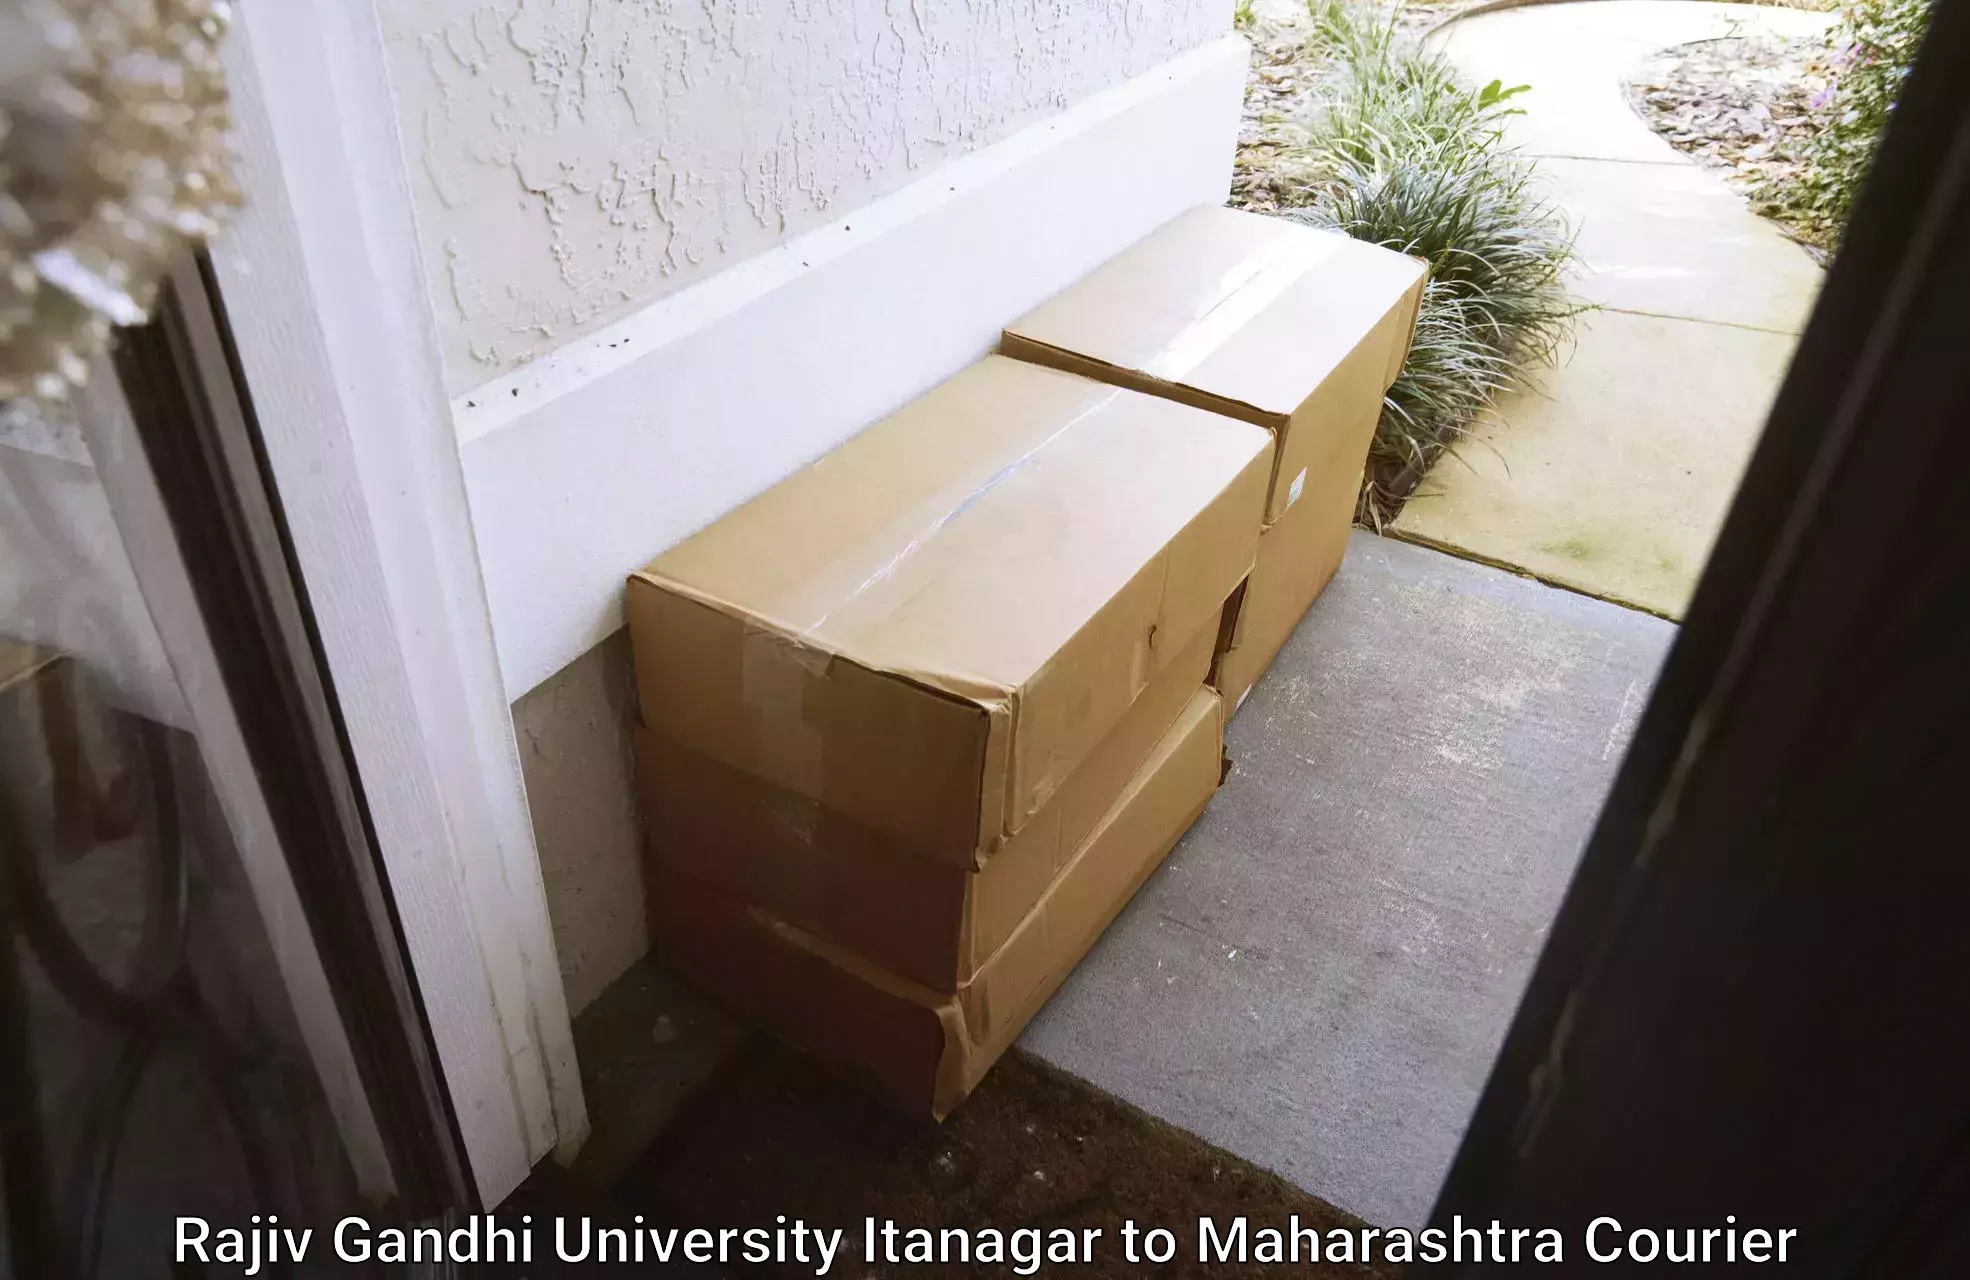 Express courier capabilities in Rajiv Gandhi University Itanagar to Nashik